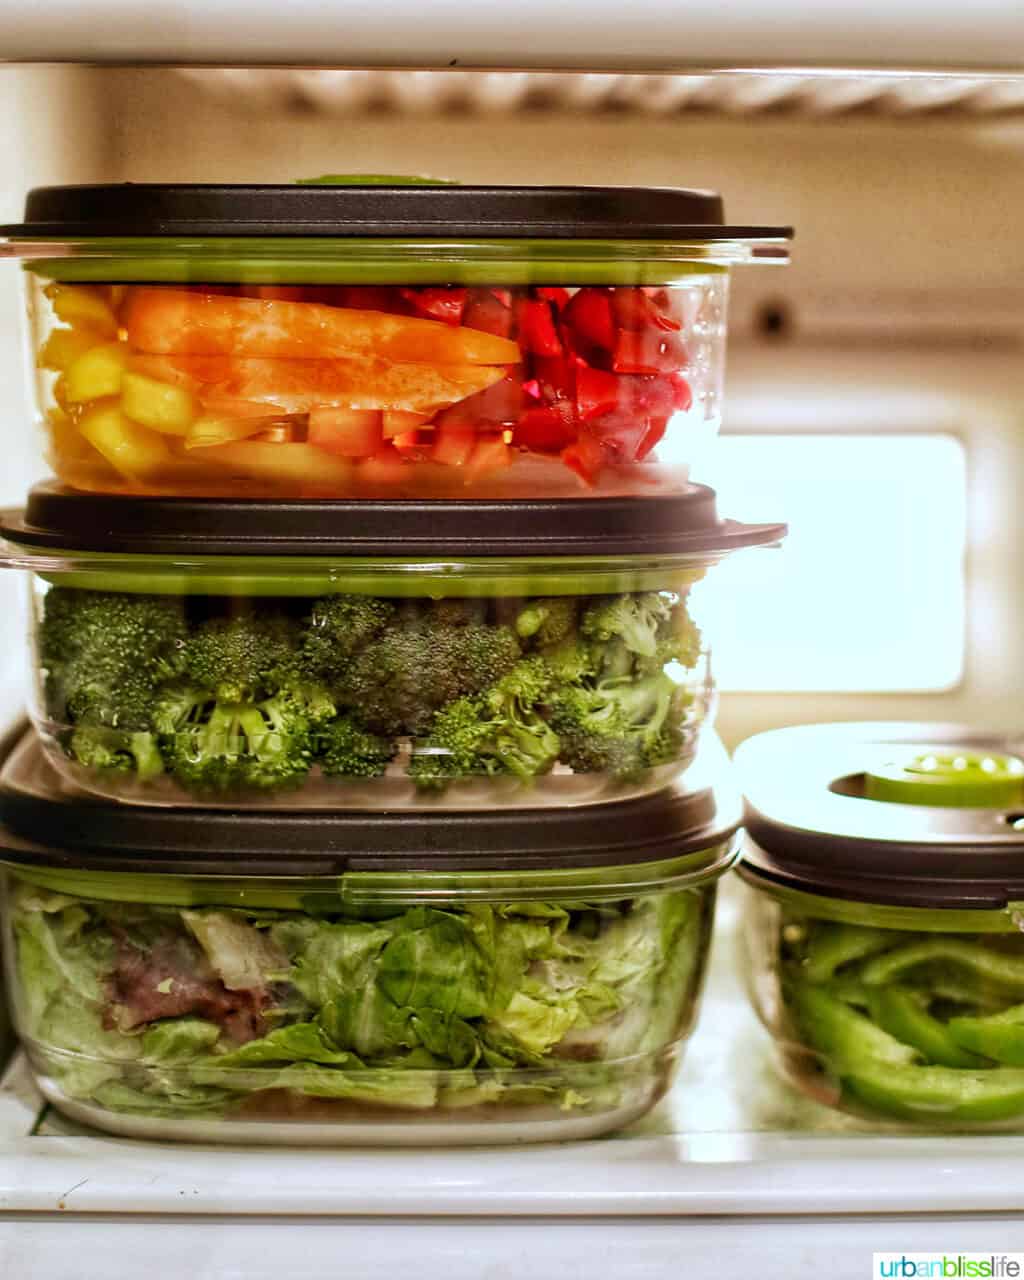 Vacuum sealed vegetables in the refrigerator